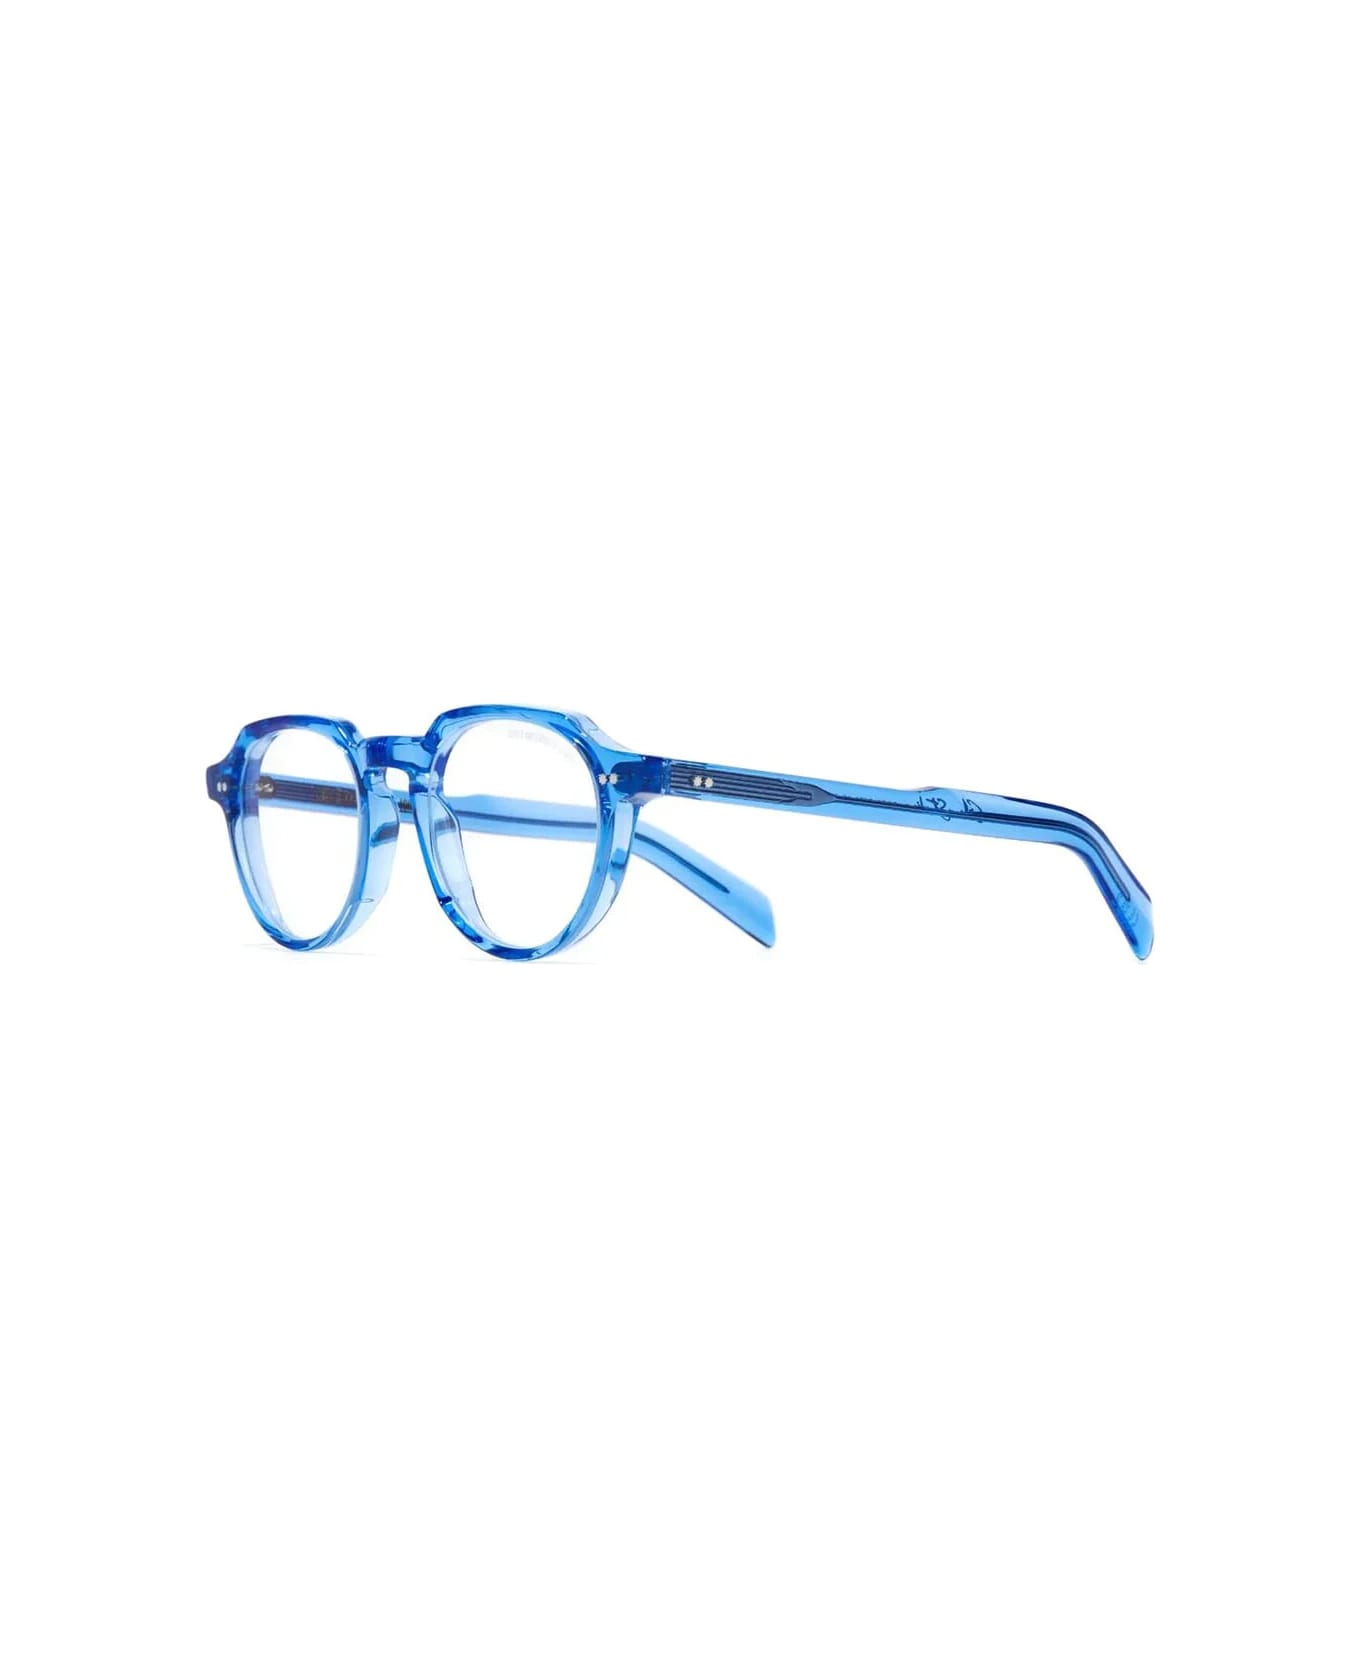 Cutler and Gross Gr06 A7 Blue Crystal Glasses - Blu